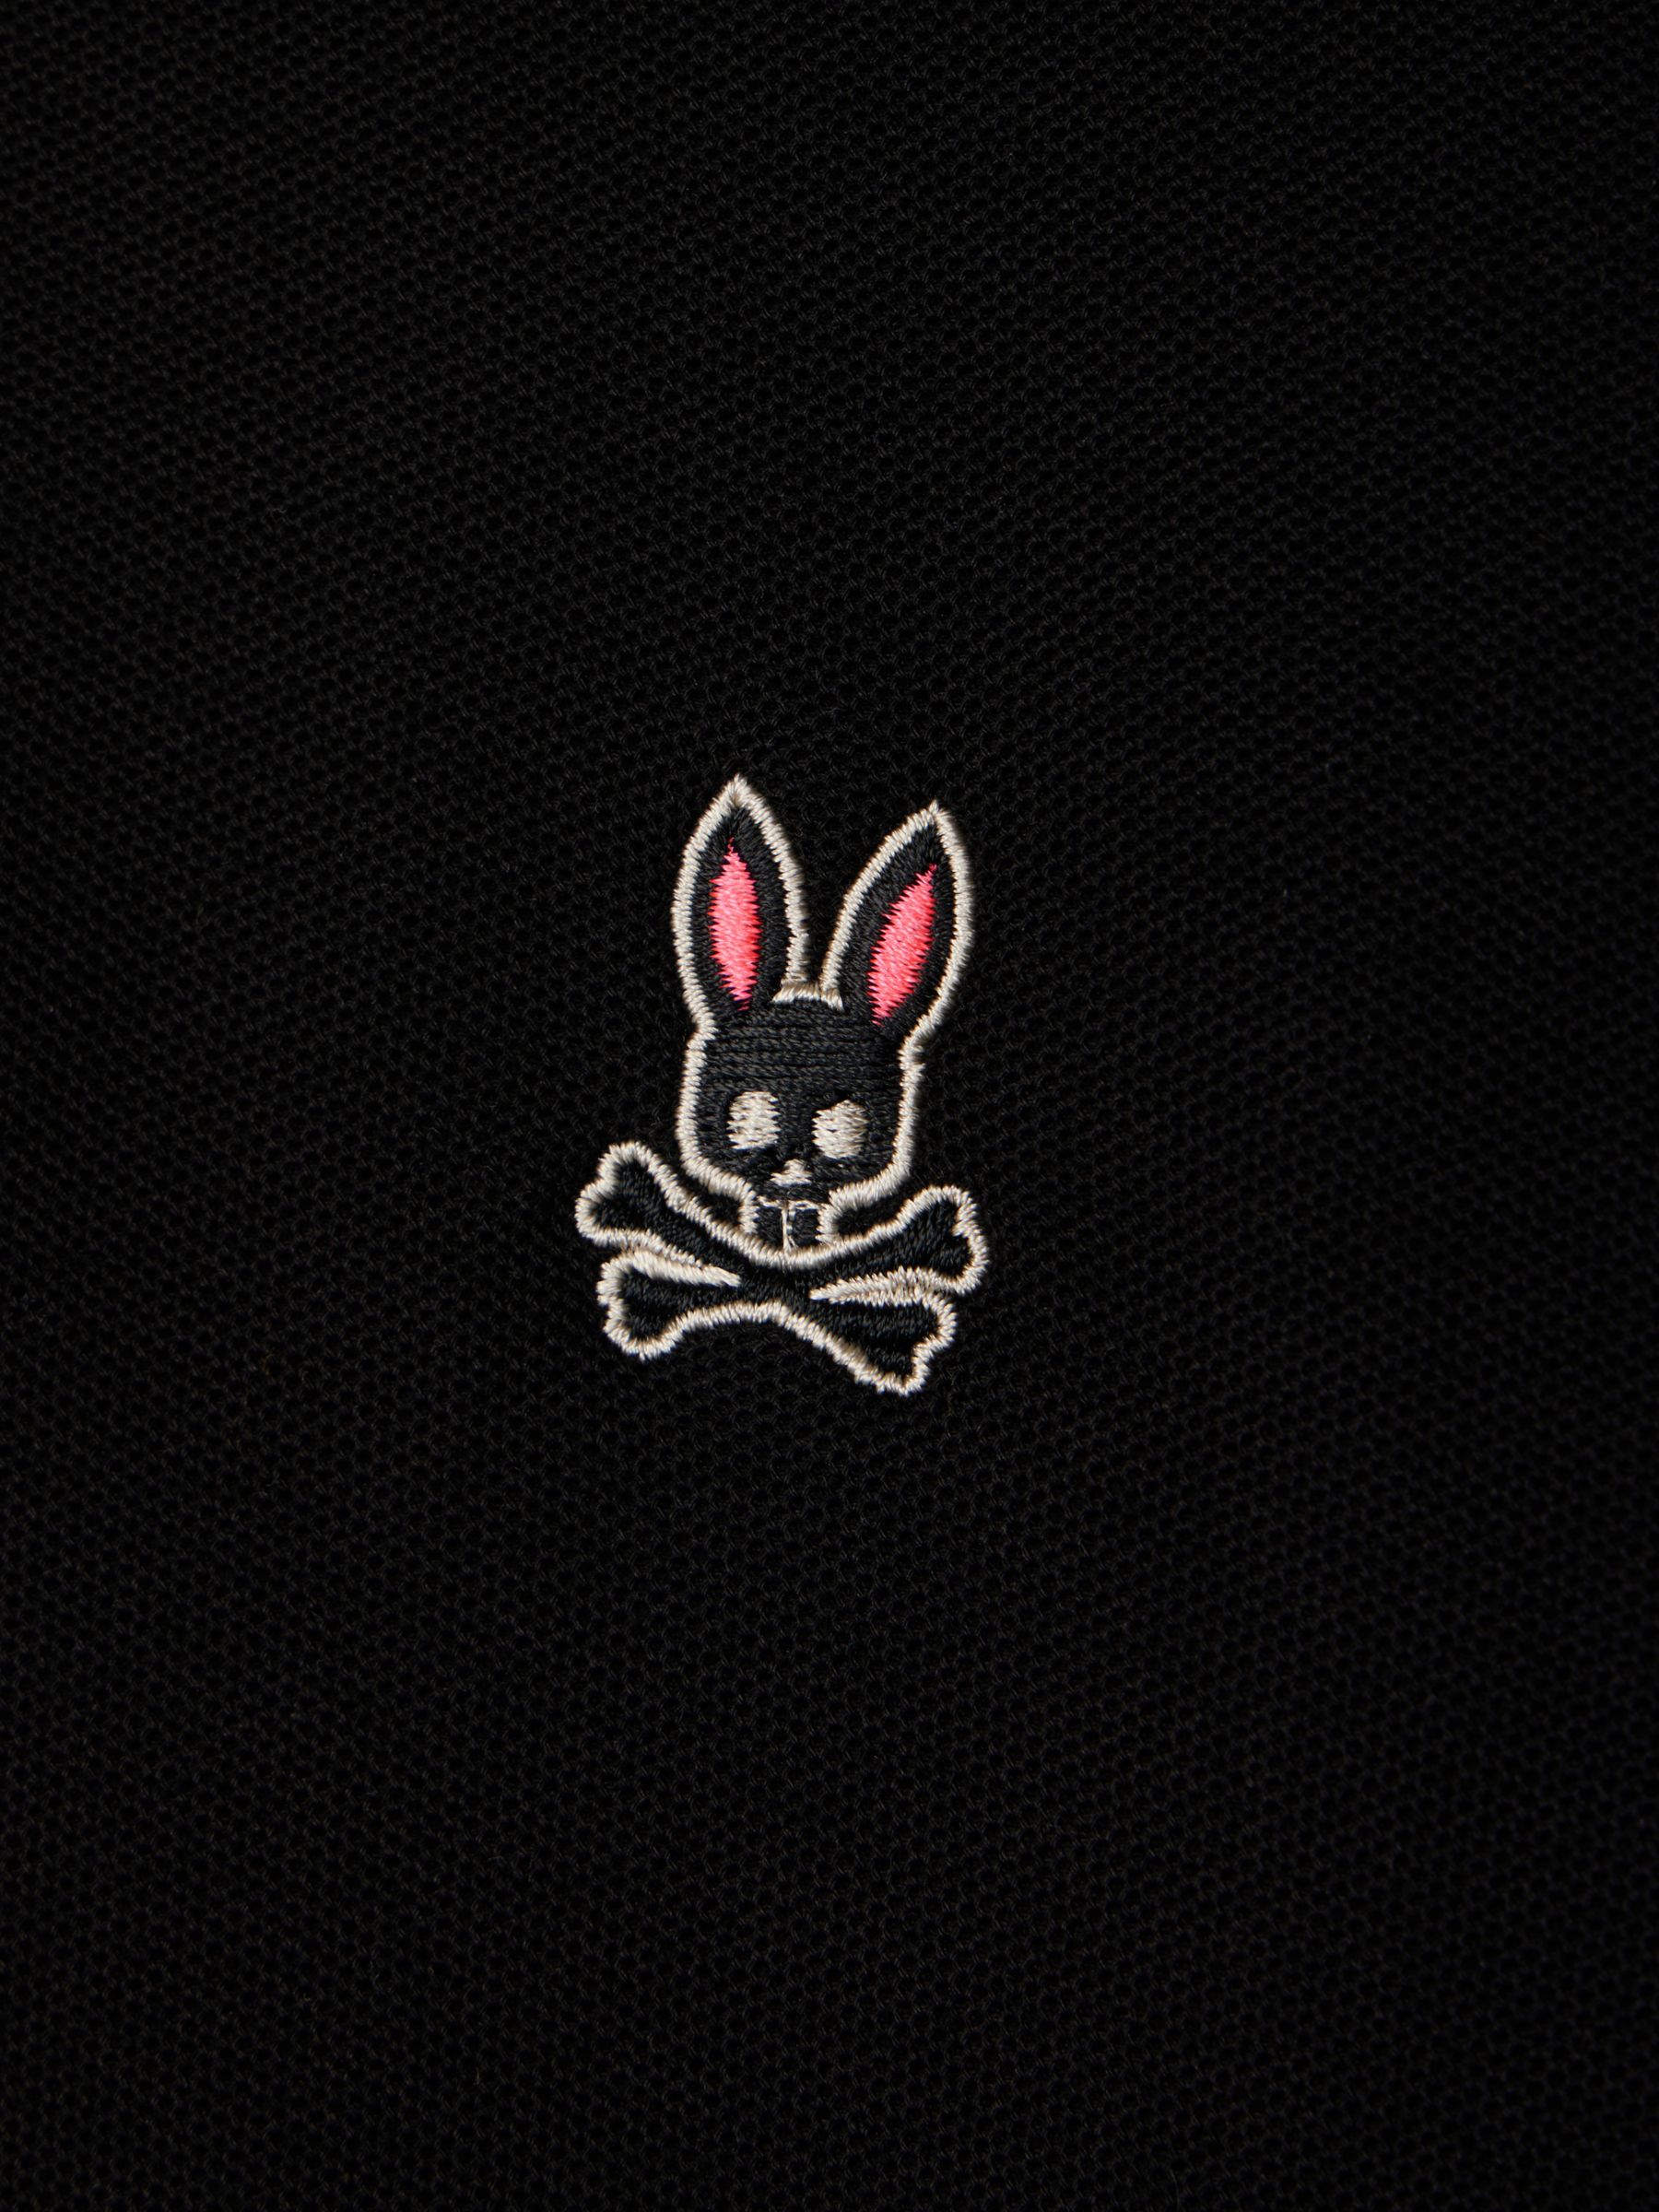 Psycho Bunny Kingsbury Pique Polo Shirt, Black, S